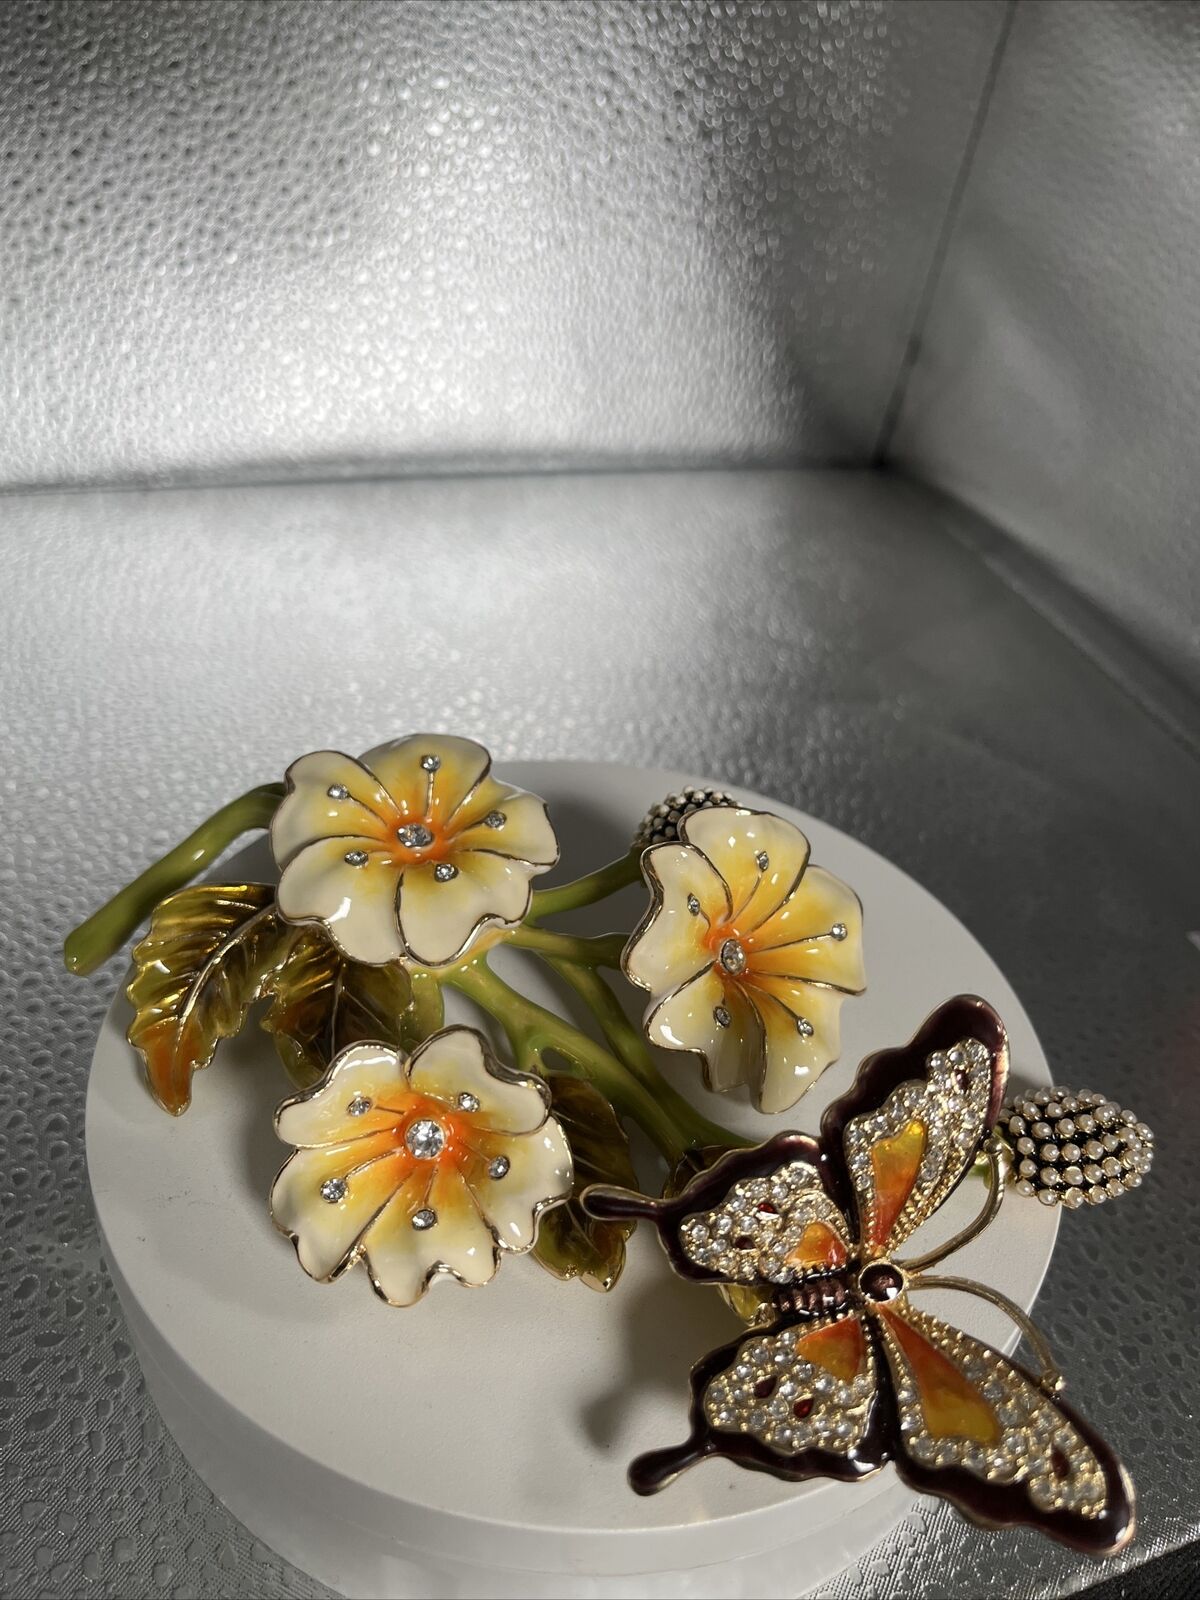 COLORFUL BUTTERFLY & FLOWERS TRINKET BOX BY KEREN KOPAL, BEAUTIFUL CRYSTALS